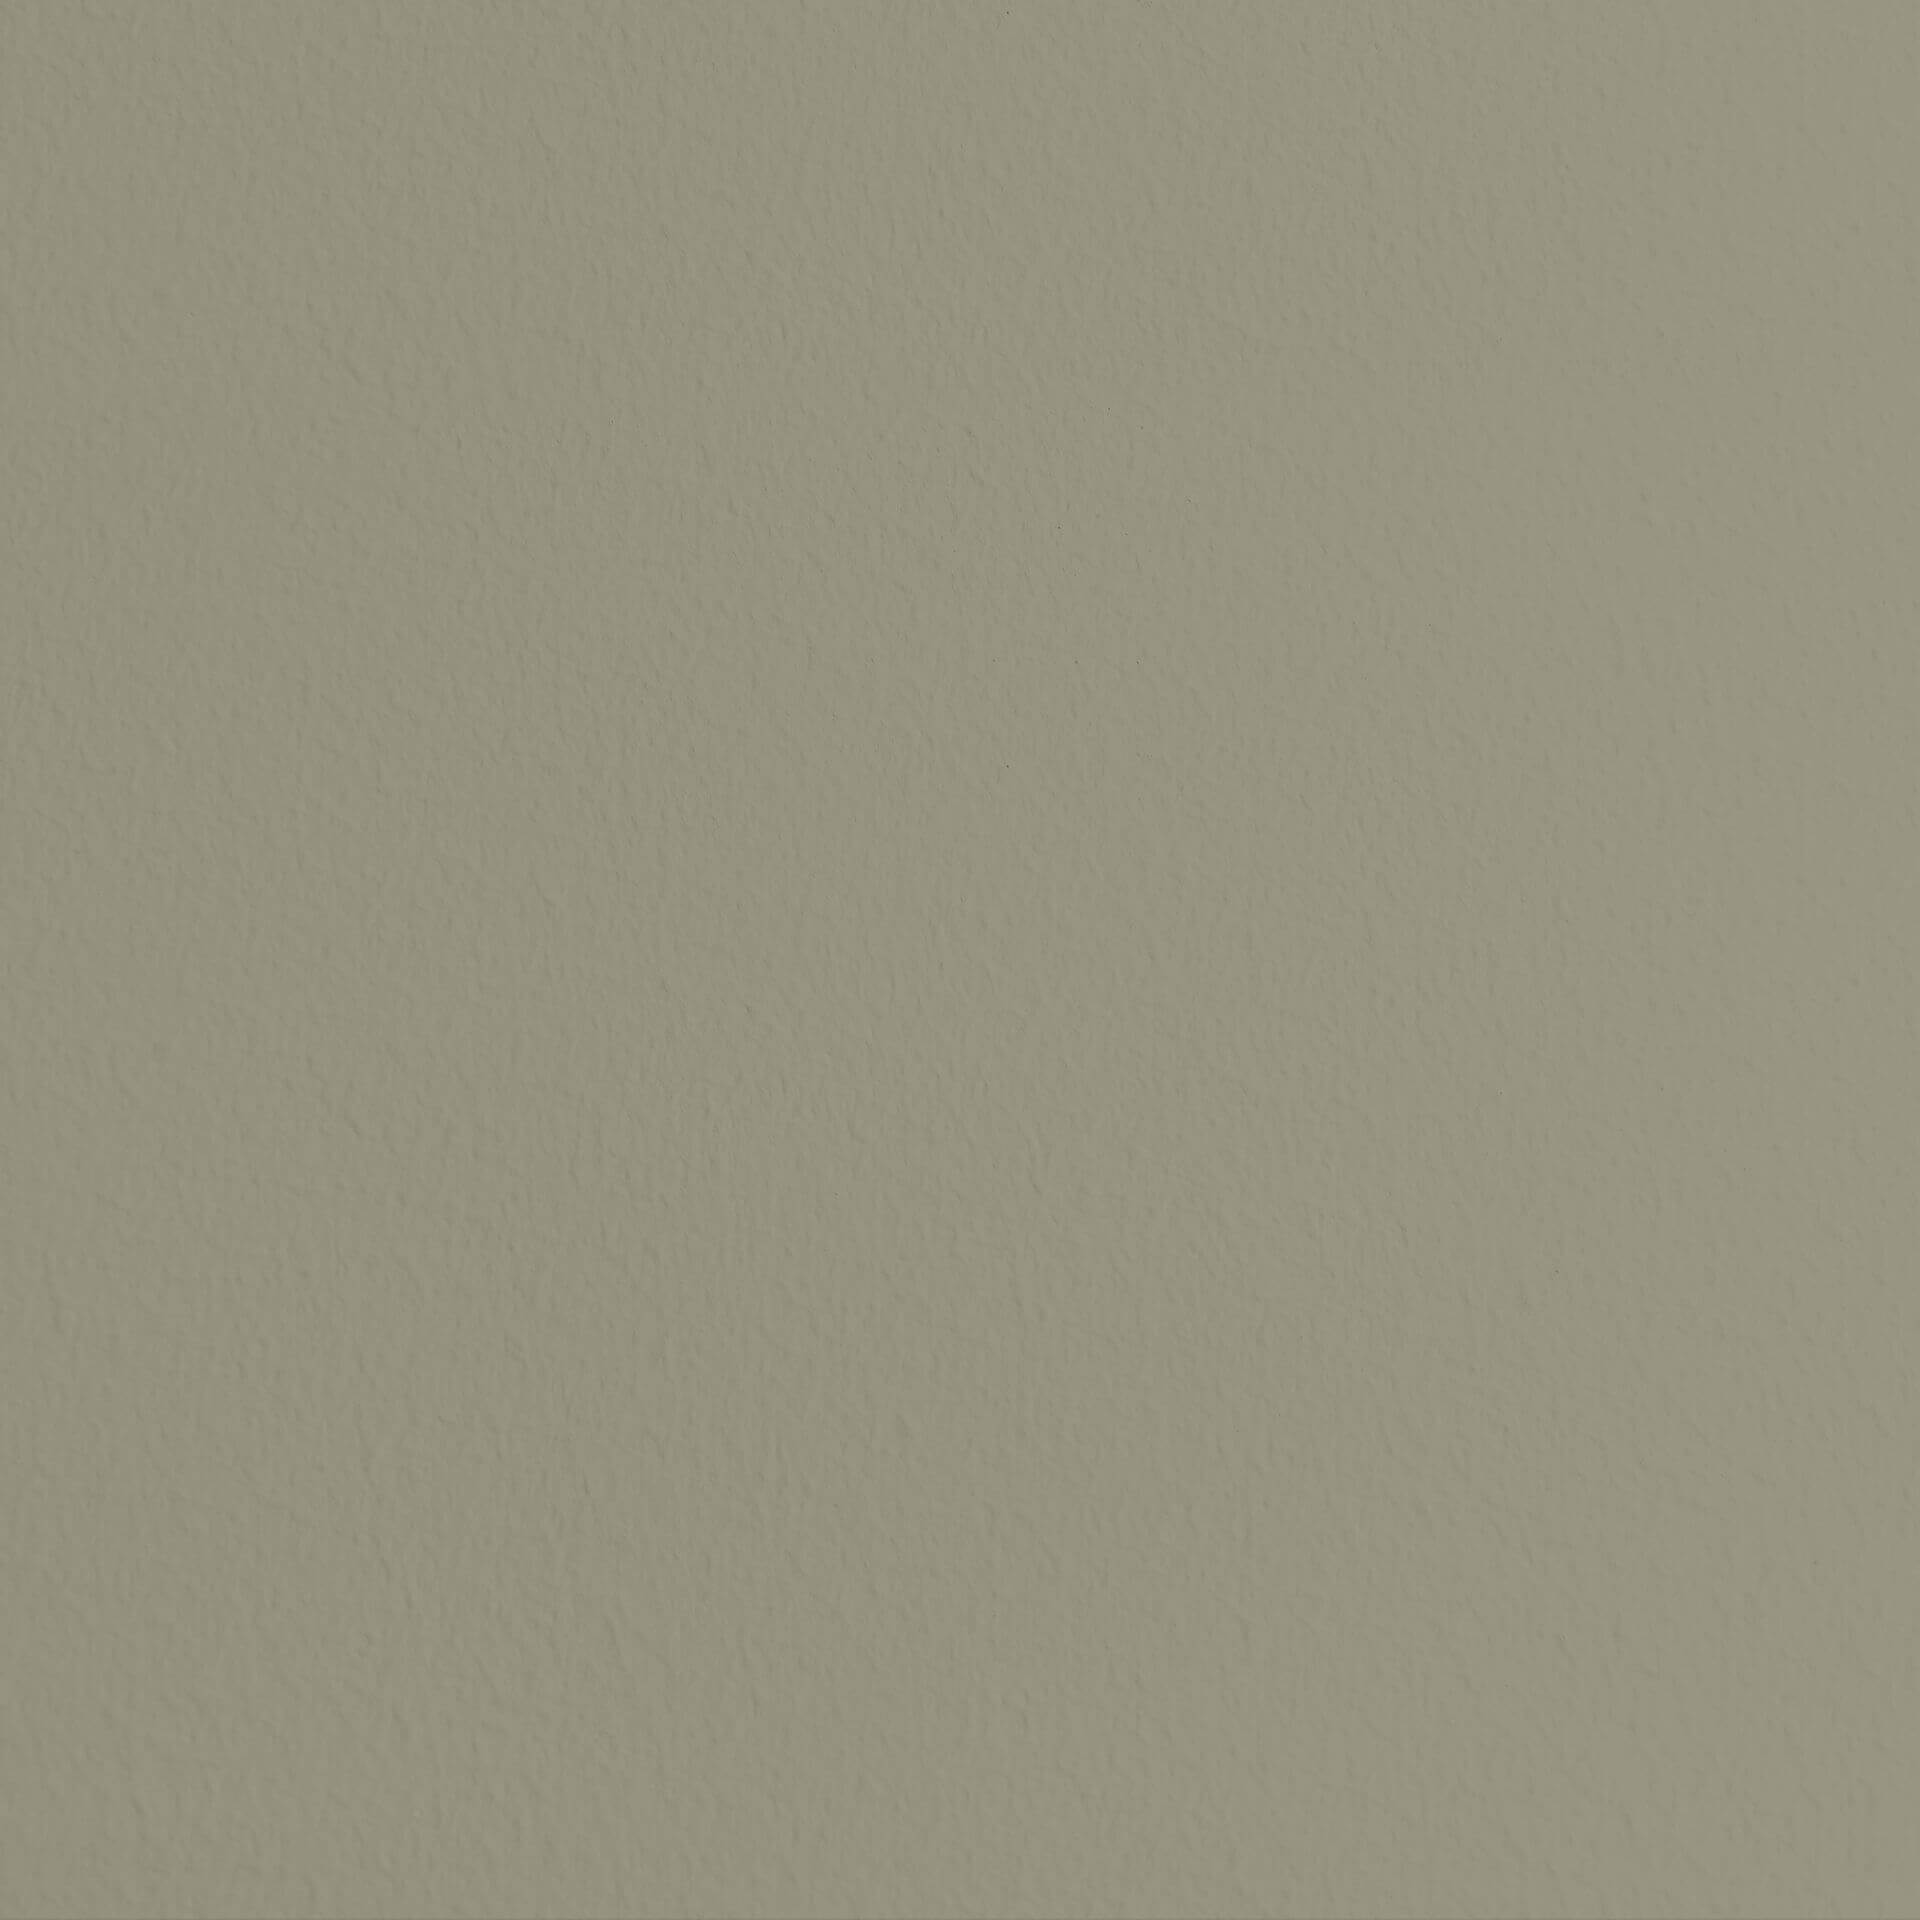 Mylands Empire Grey No. 171 - Wood & Metal Gloss / Lack Glänzend, 2.5L